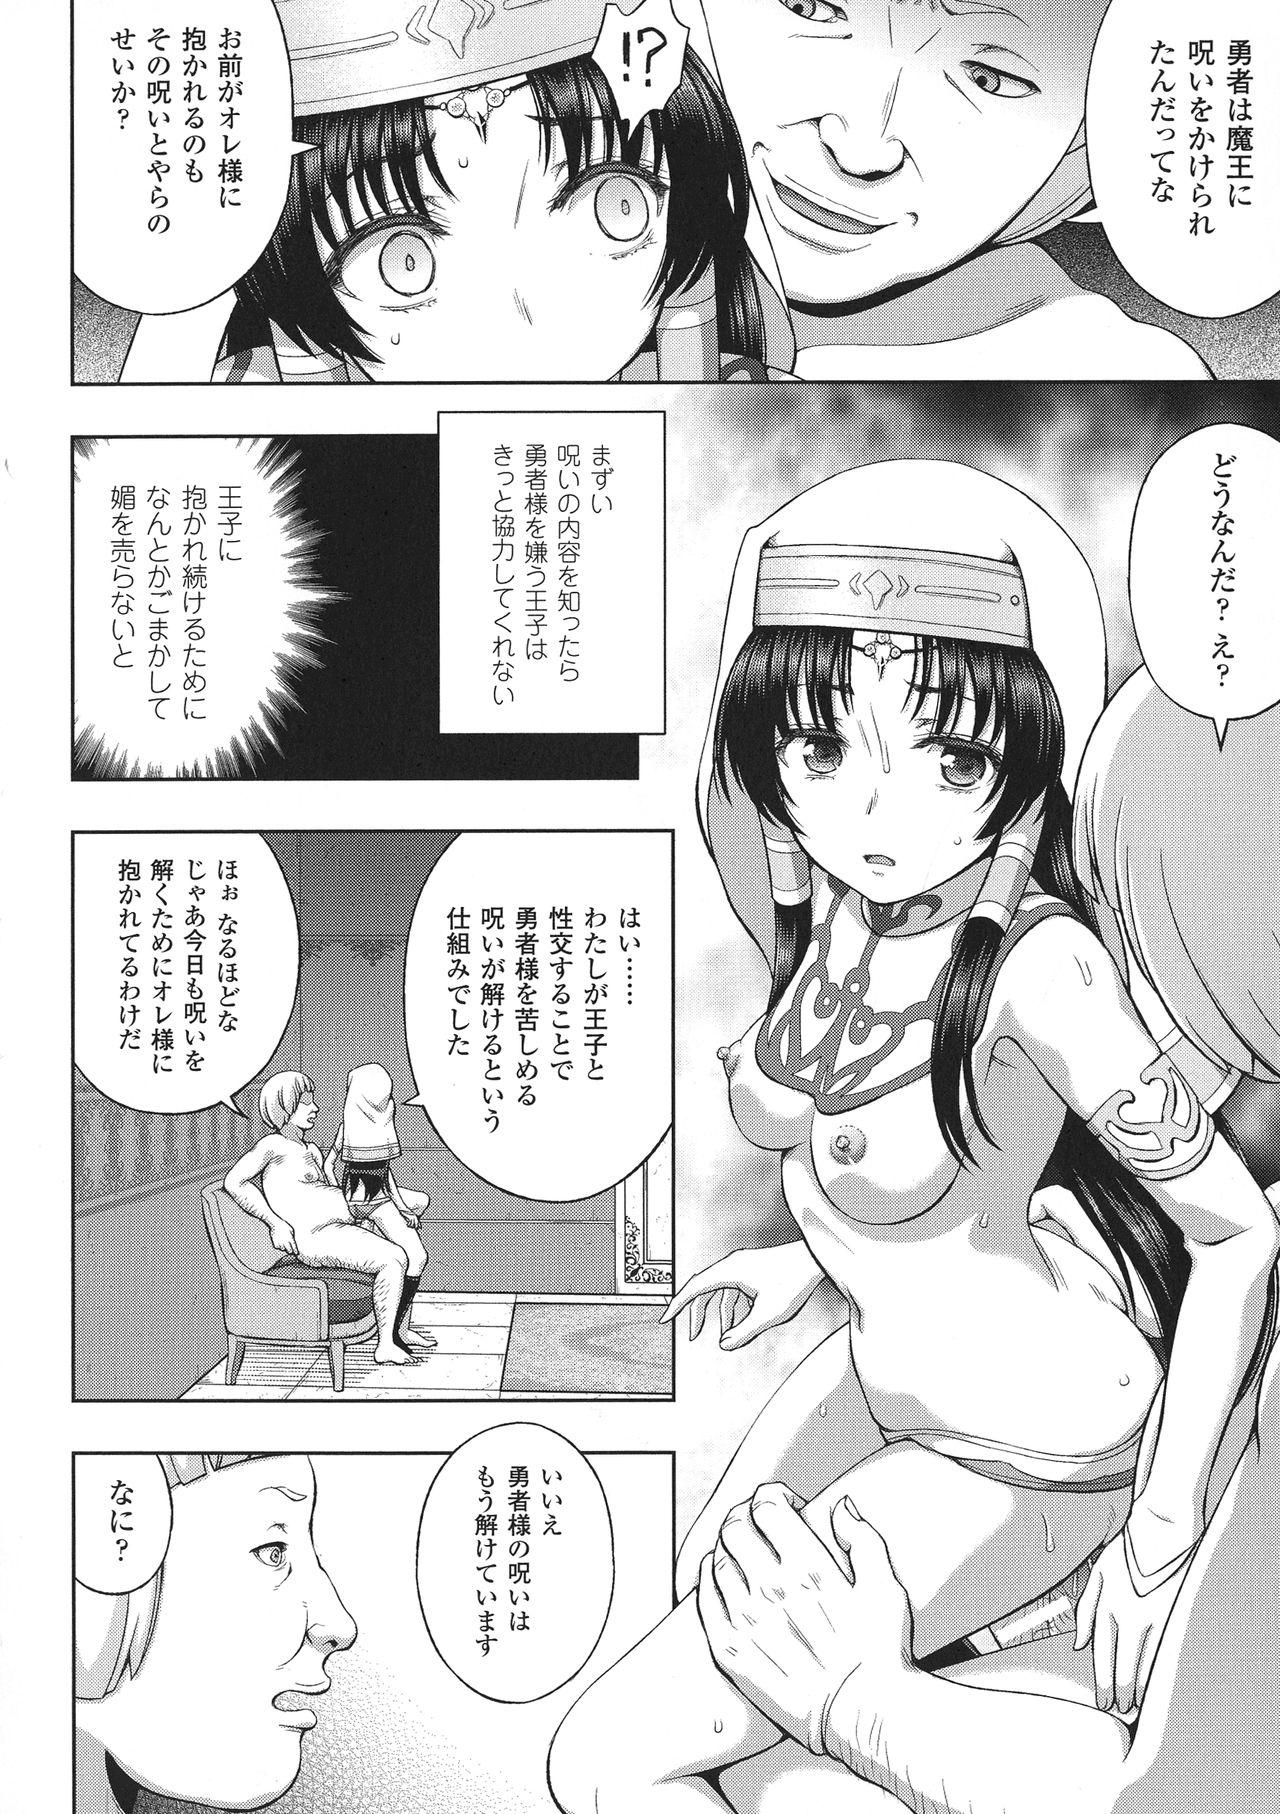 Seigi no Heroine Kangoku File DX Vol. 8 61